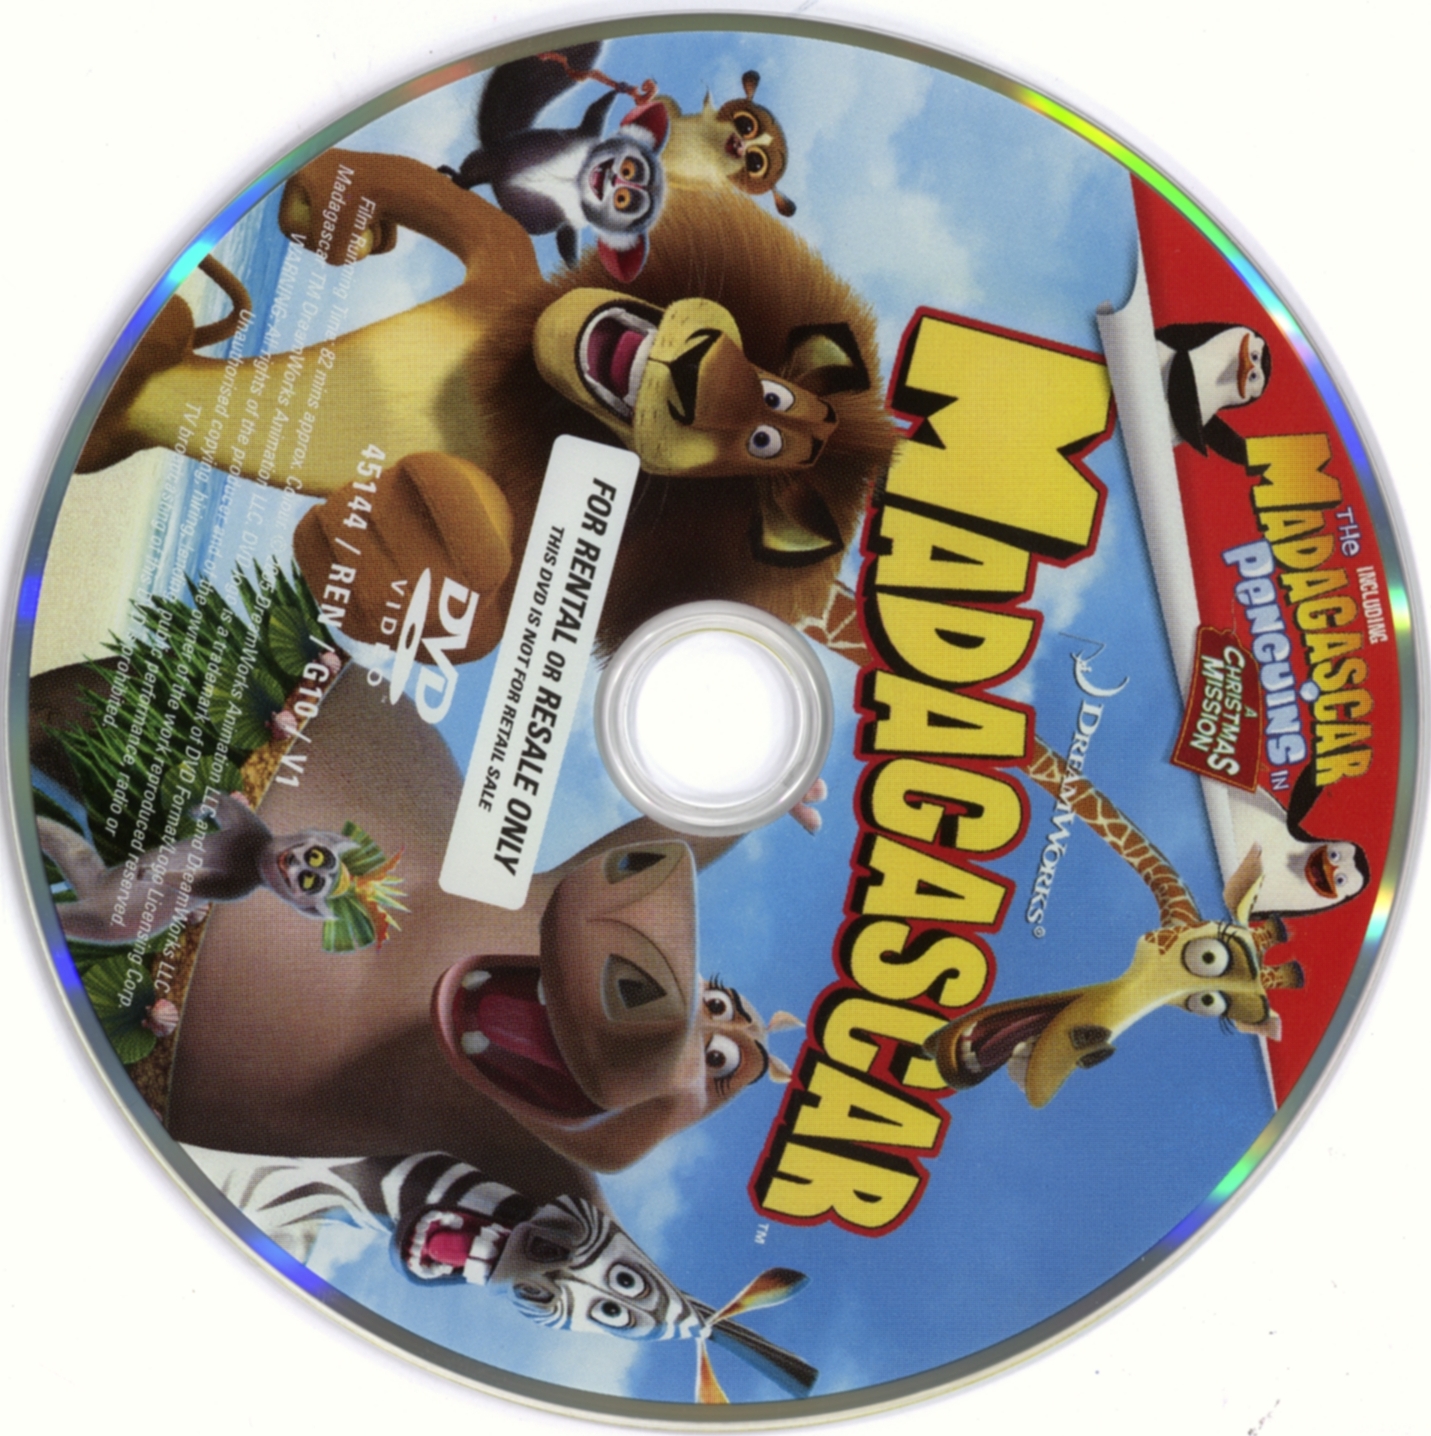 Covers Box Sk Madagascar 05 High Quality Dvd Blueray Movie